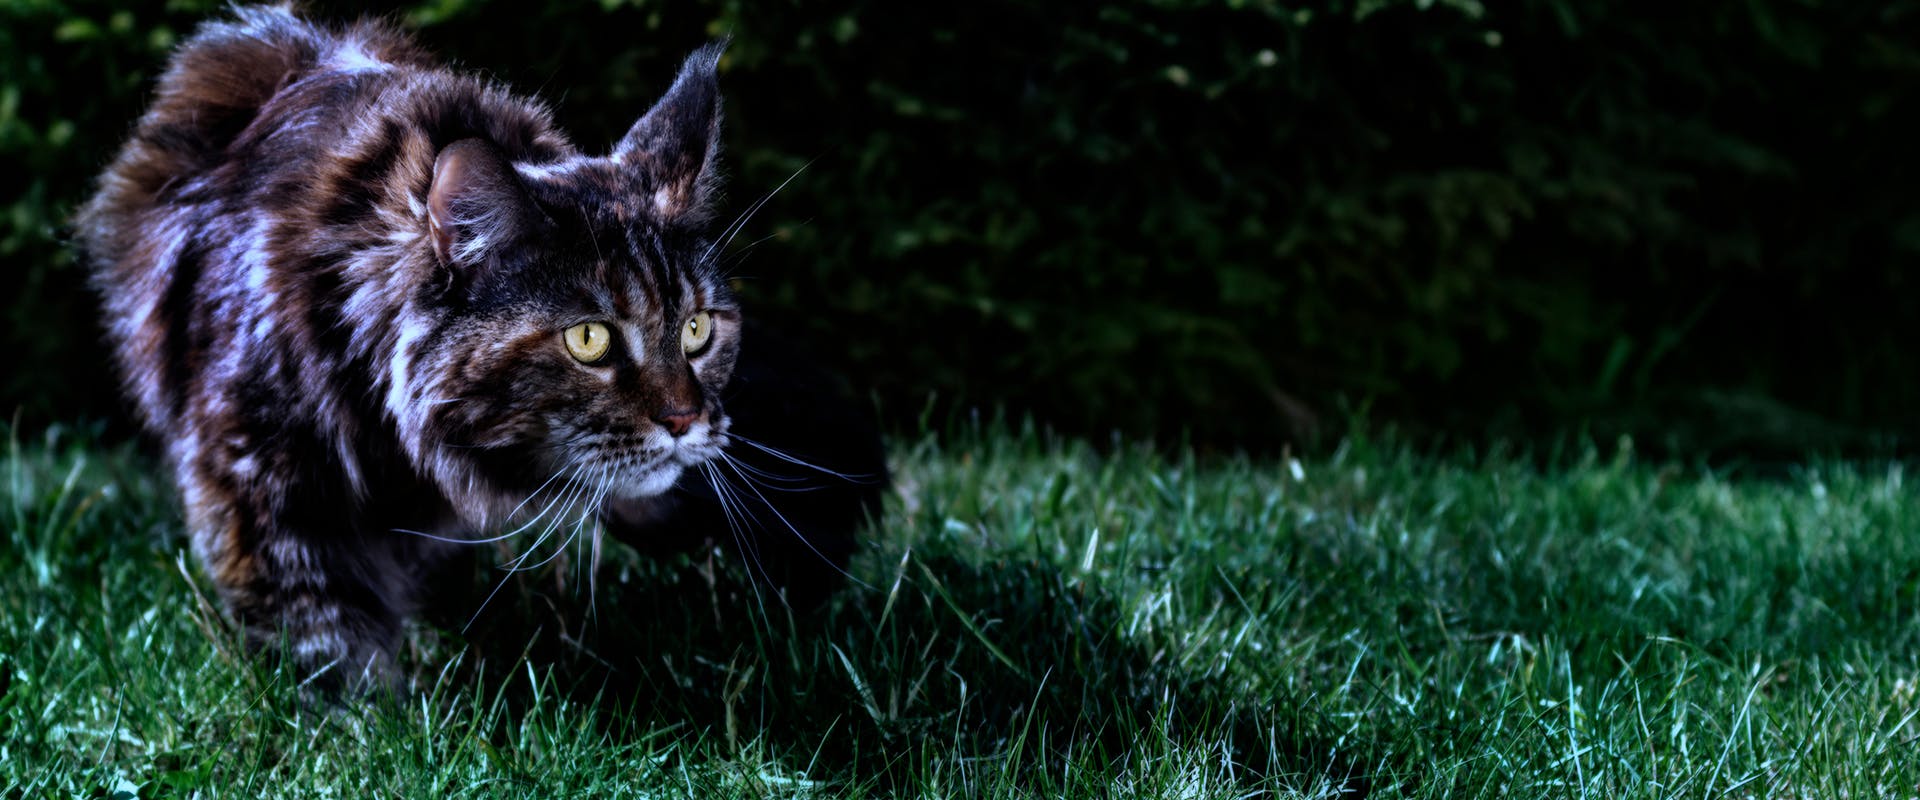 A cat prowling through grass at nighttime